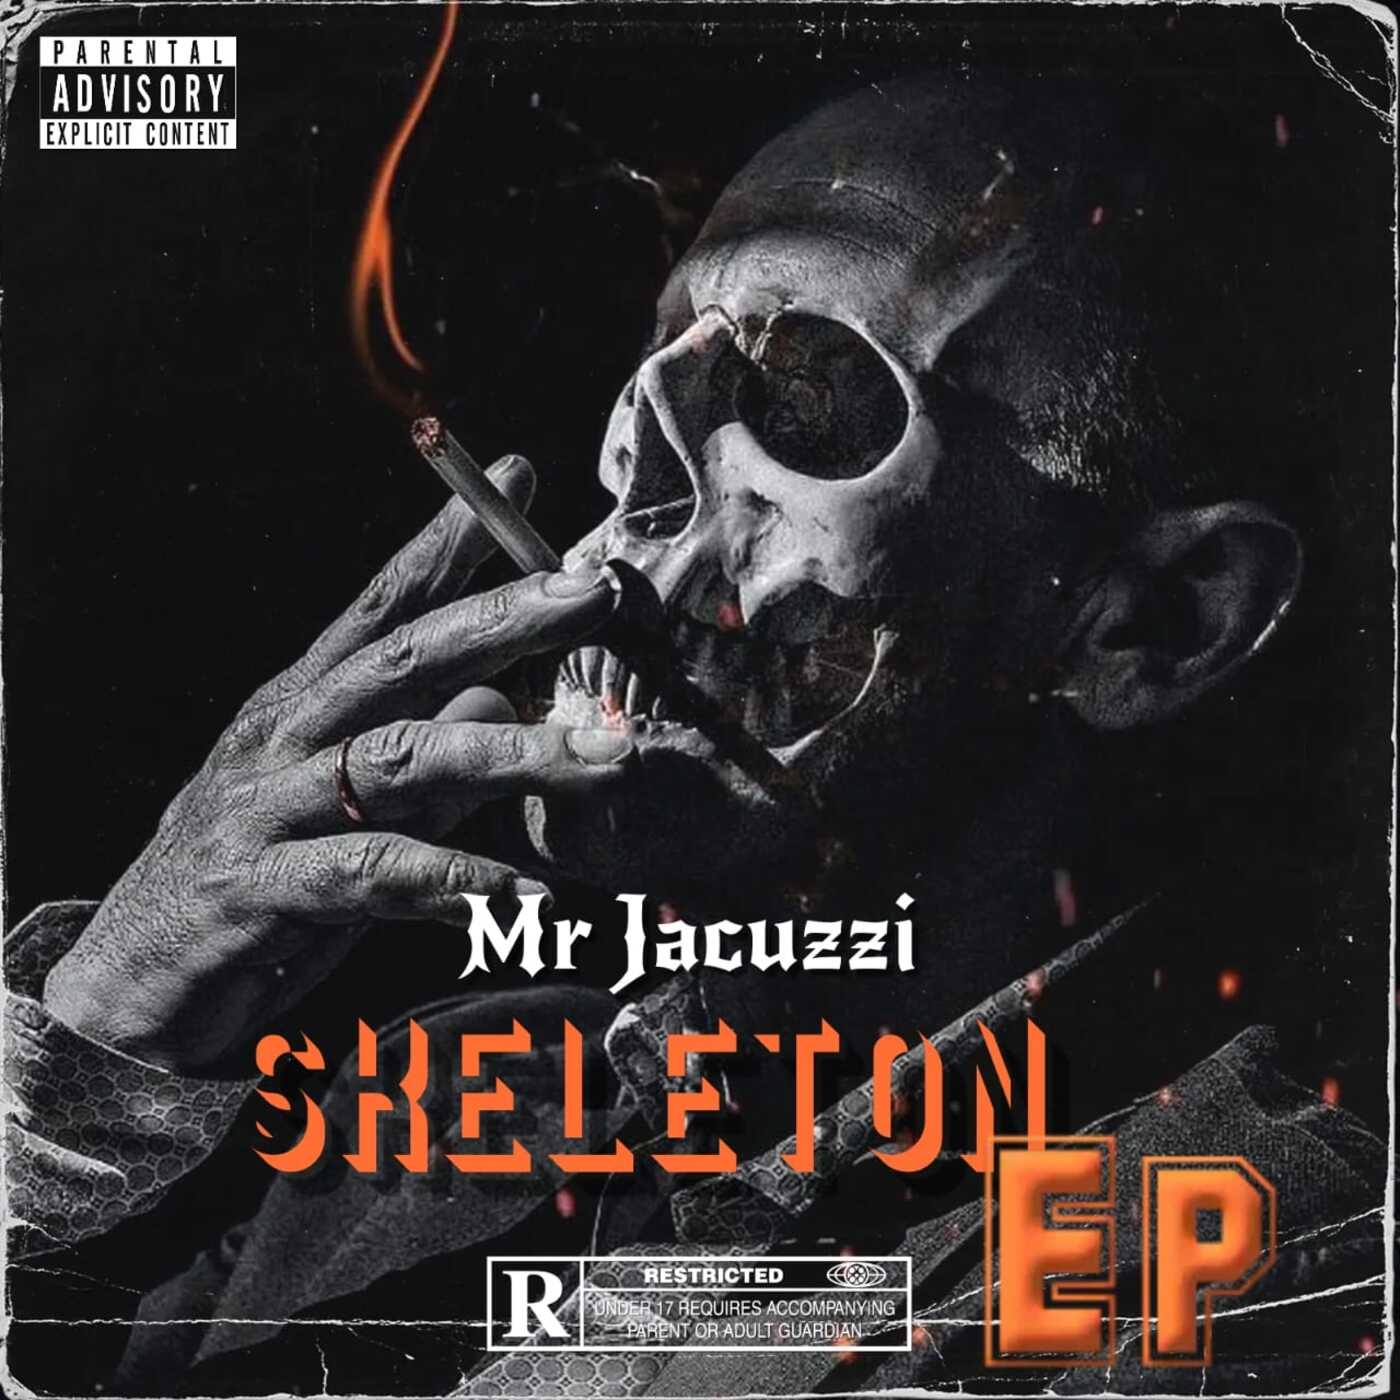 Skeleton E.p - Mr jacuzzi